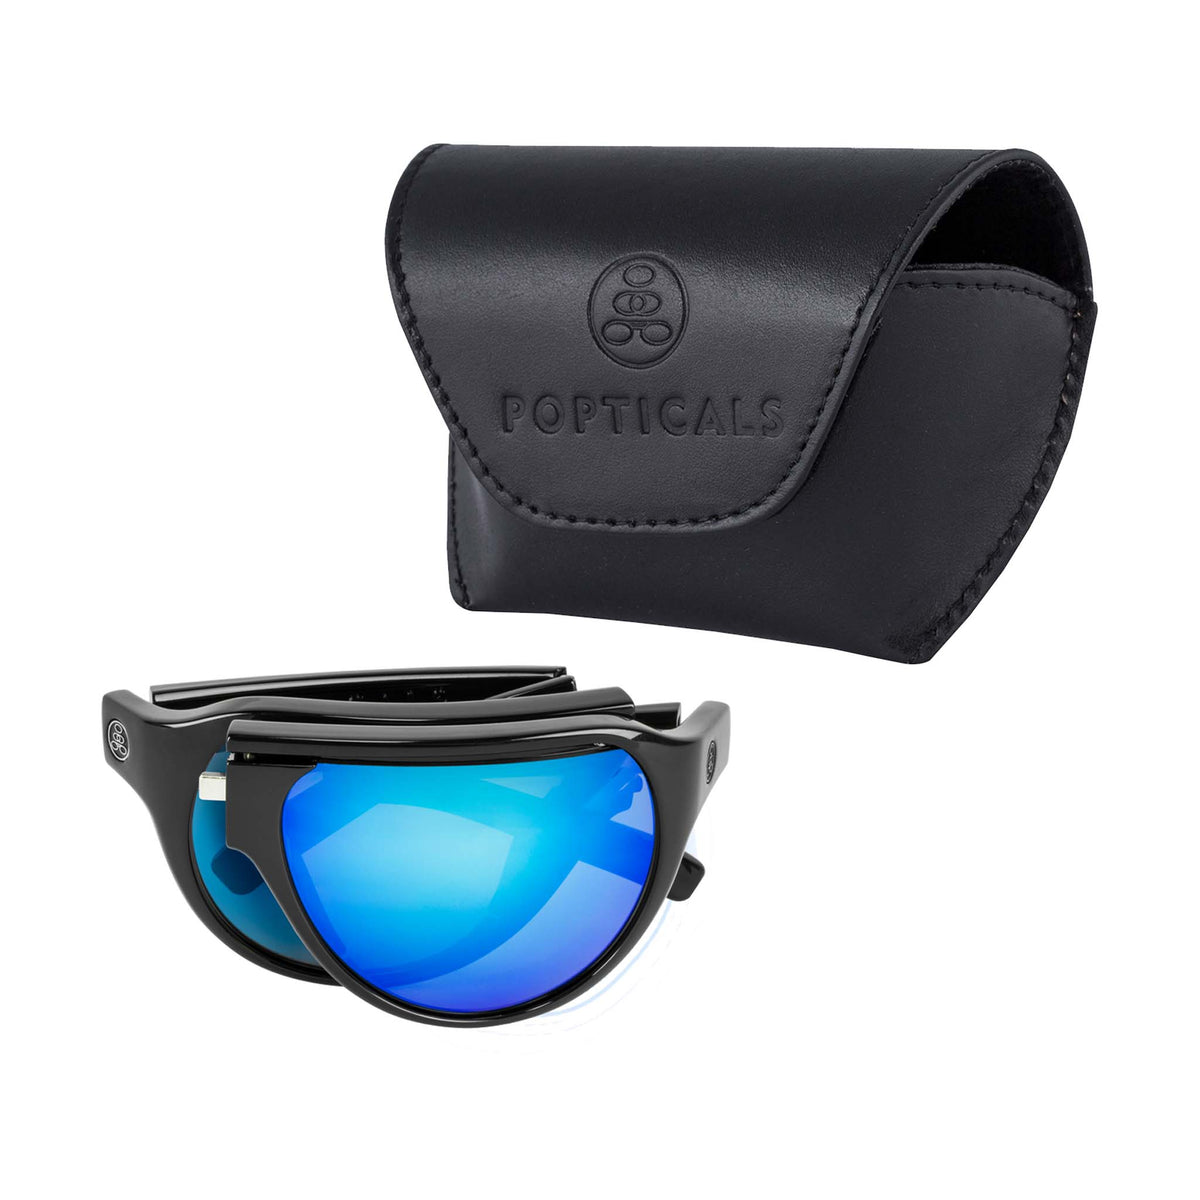 Popticals, Premium Compact Sunglasses, PopAir, 300010-BGUN, Polarized Sunglasses, Gloss Black Frame, Gray Lenses with Blue Mirror Finish, Case View